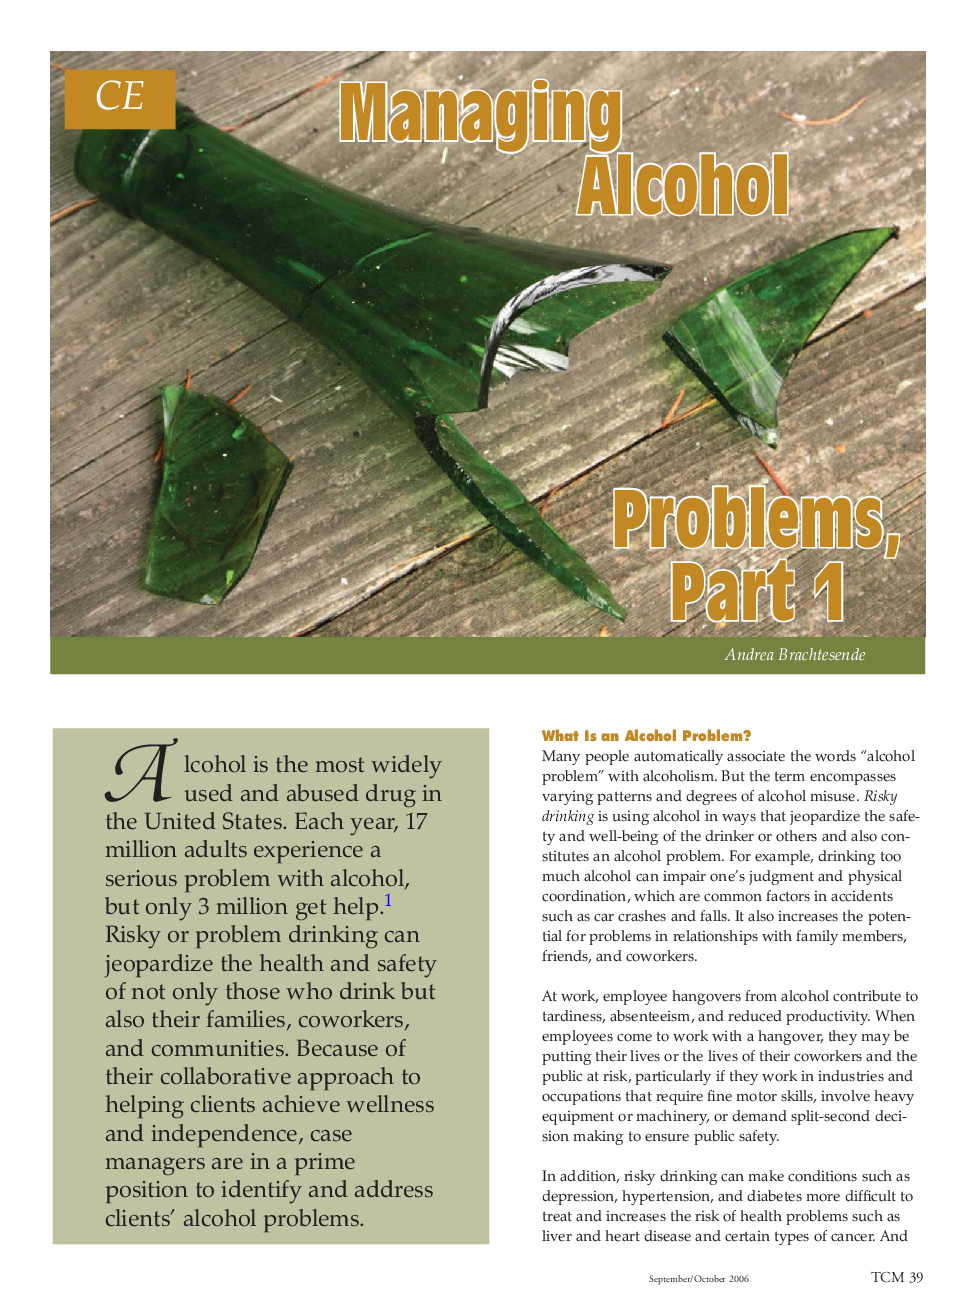 CE: Managing alcohol problems, Part 1 